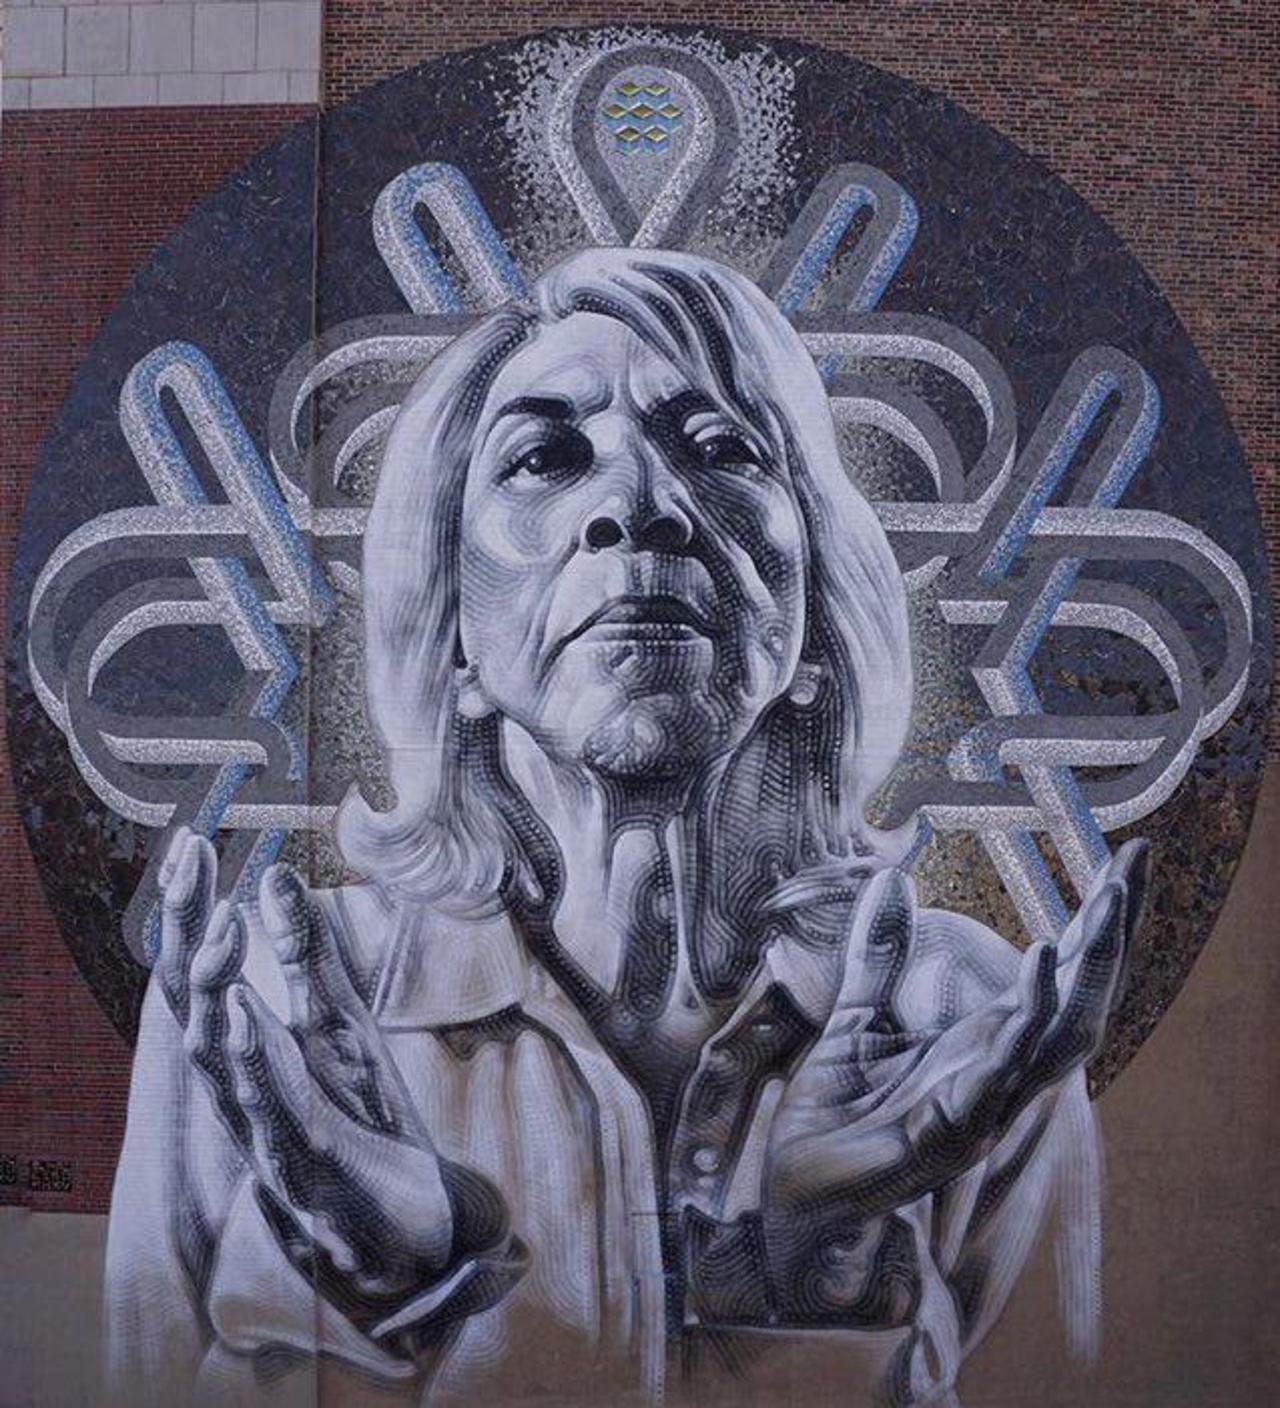 New tumblr post: "New Street Art by El Mac 

#art #graffiti #mural #streetart https://t.co/E9OneO1rp6" http://ift.tt/1KmIvgS , IFTTT, Tw…